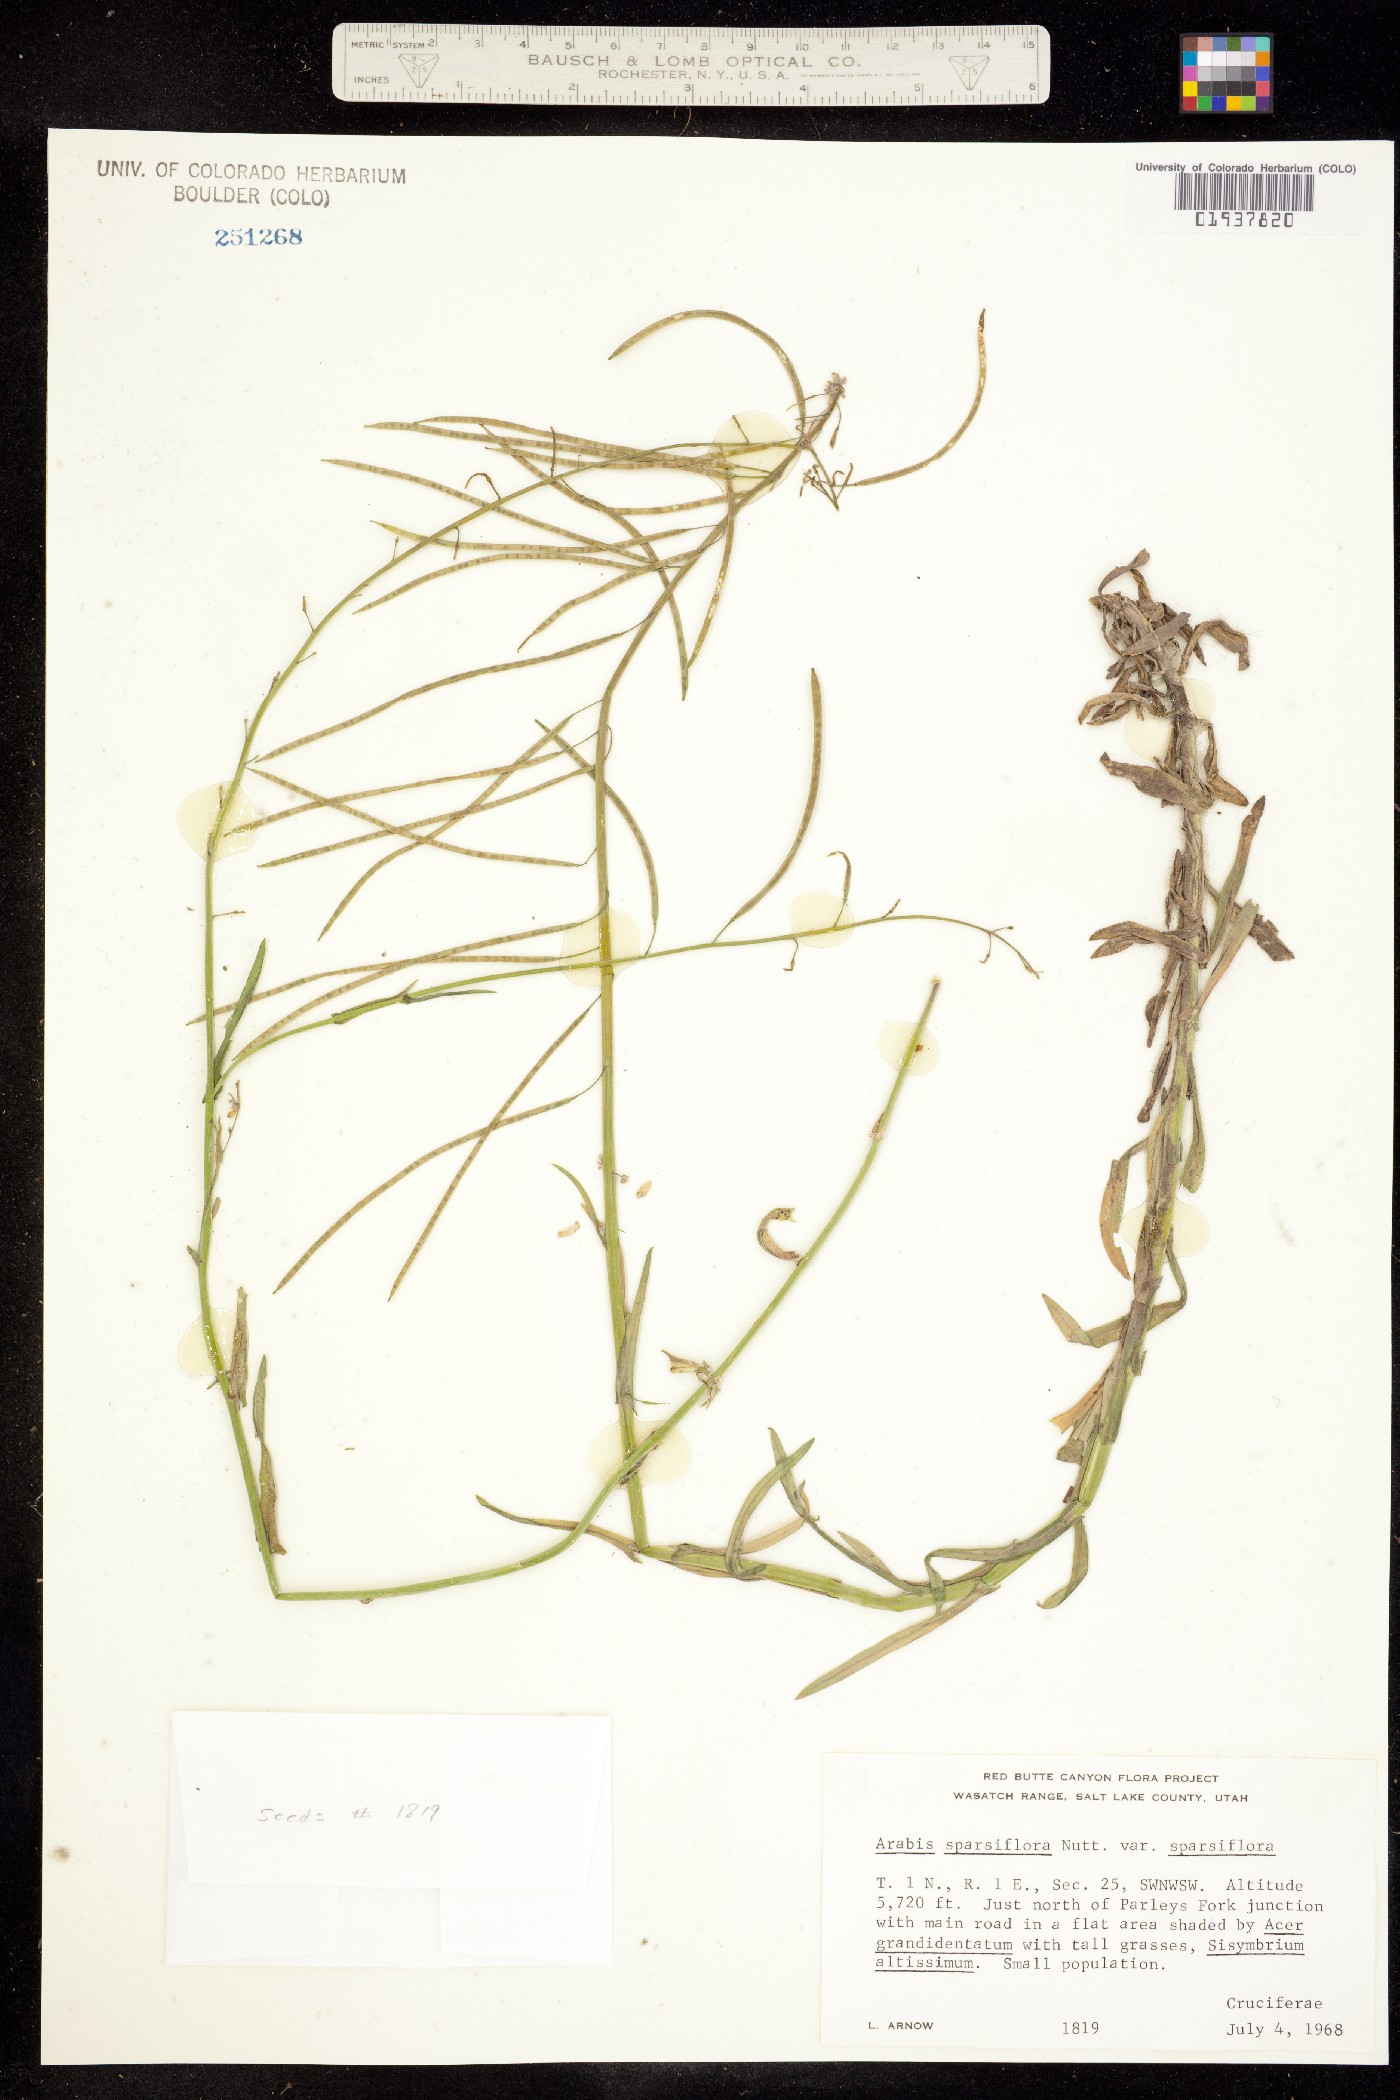 Boechera sparsiflora image